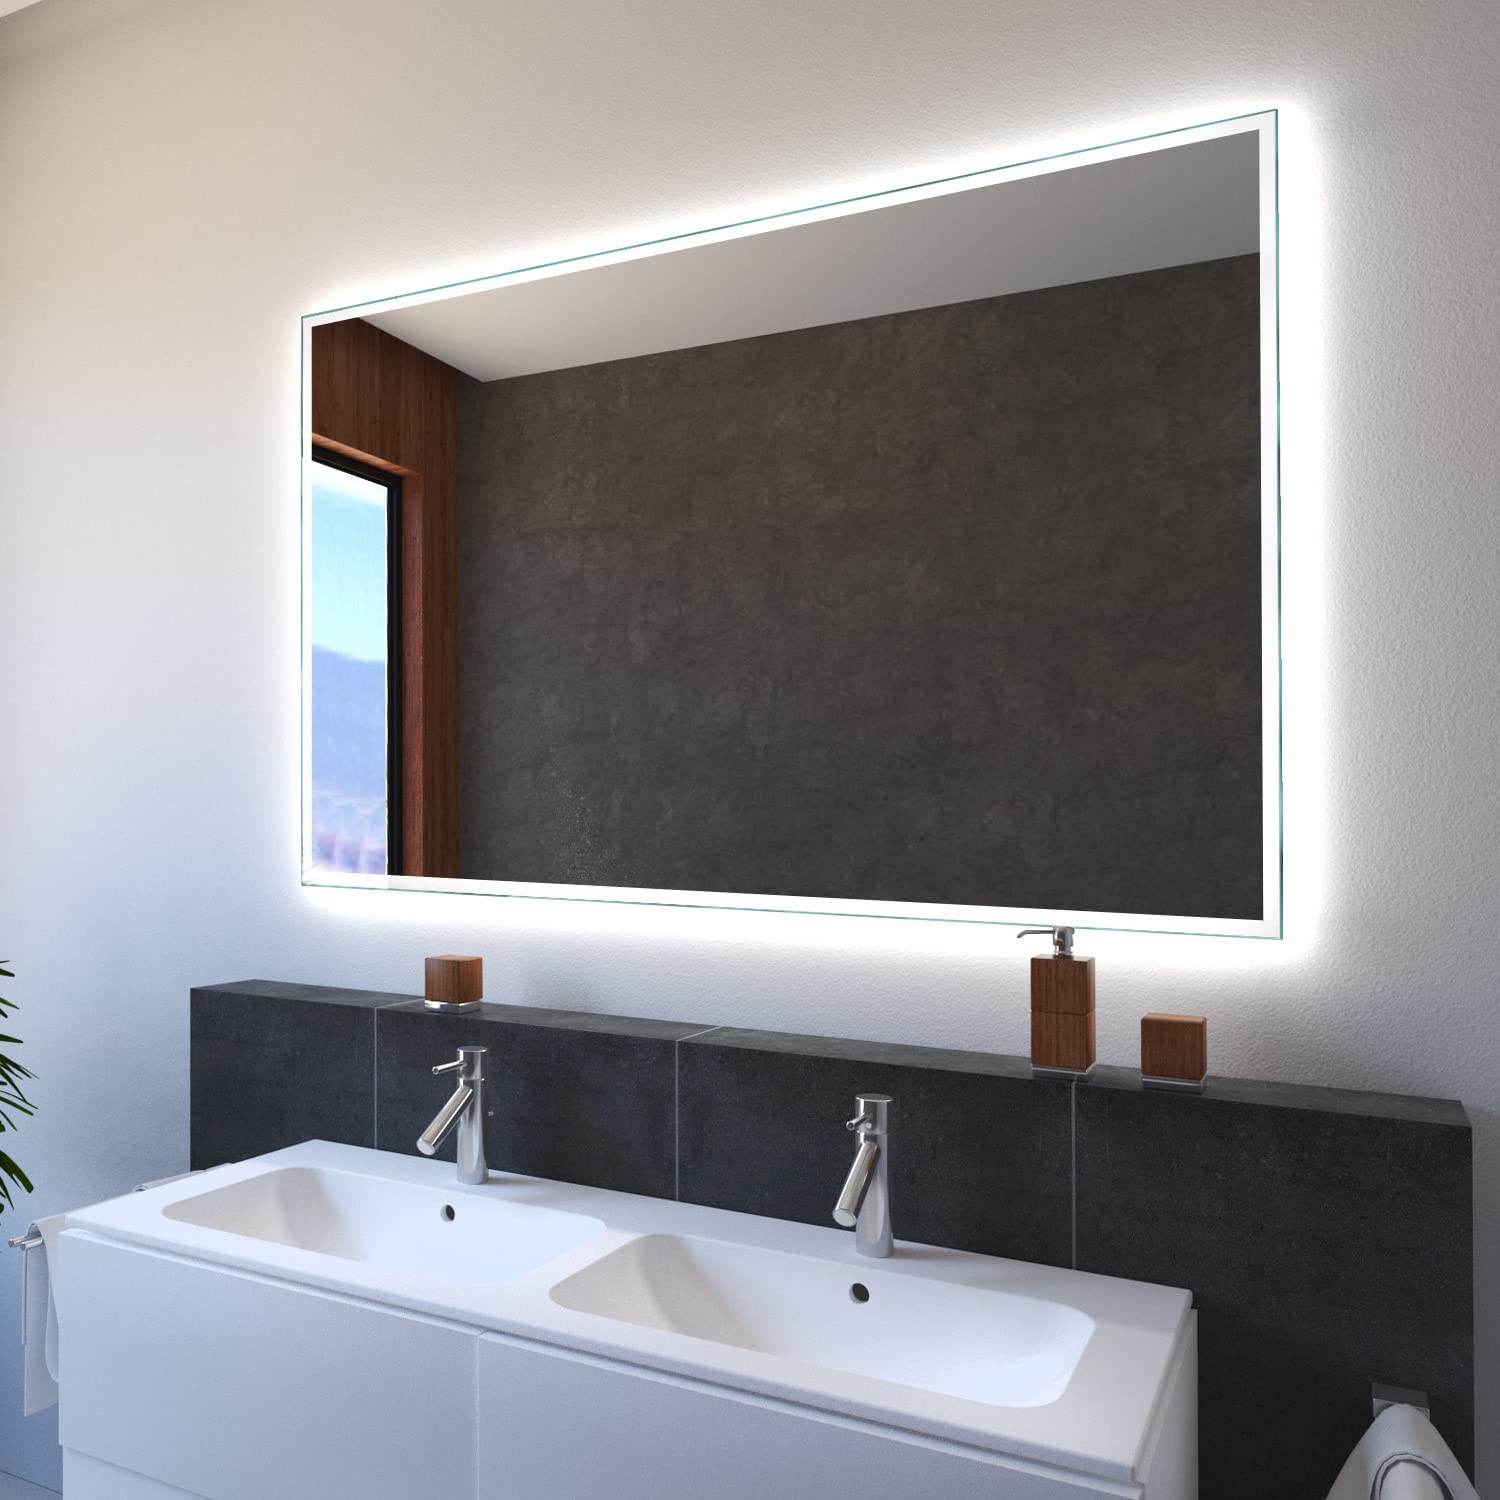 SARAR Wandspiegel mit schmaler rundum LED-Beleuchtung 70x90cm Made in Germany Designo MA4111 Badspiegel Spiegel mit Beleuchtung Badezimmerspiegel nach-auf Maß